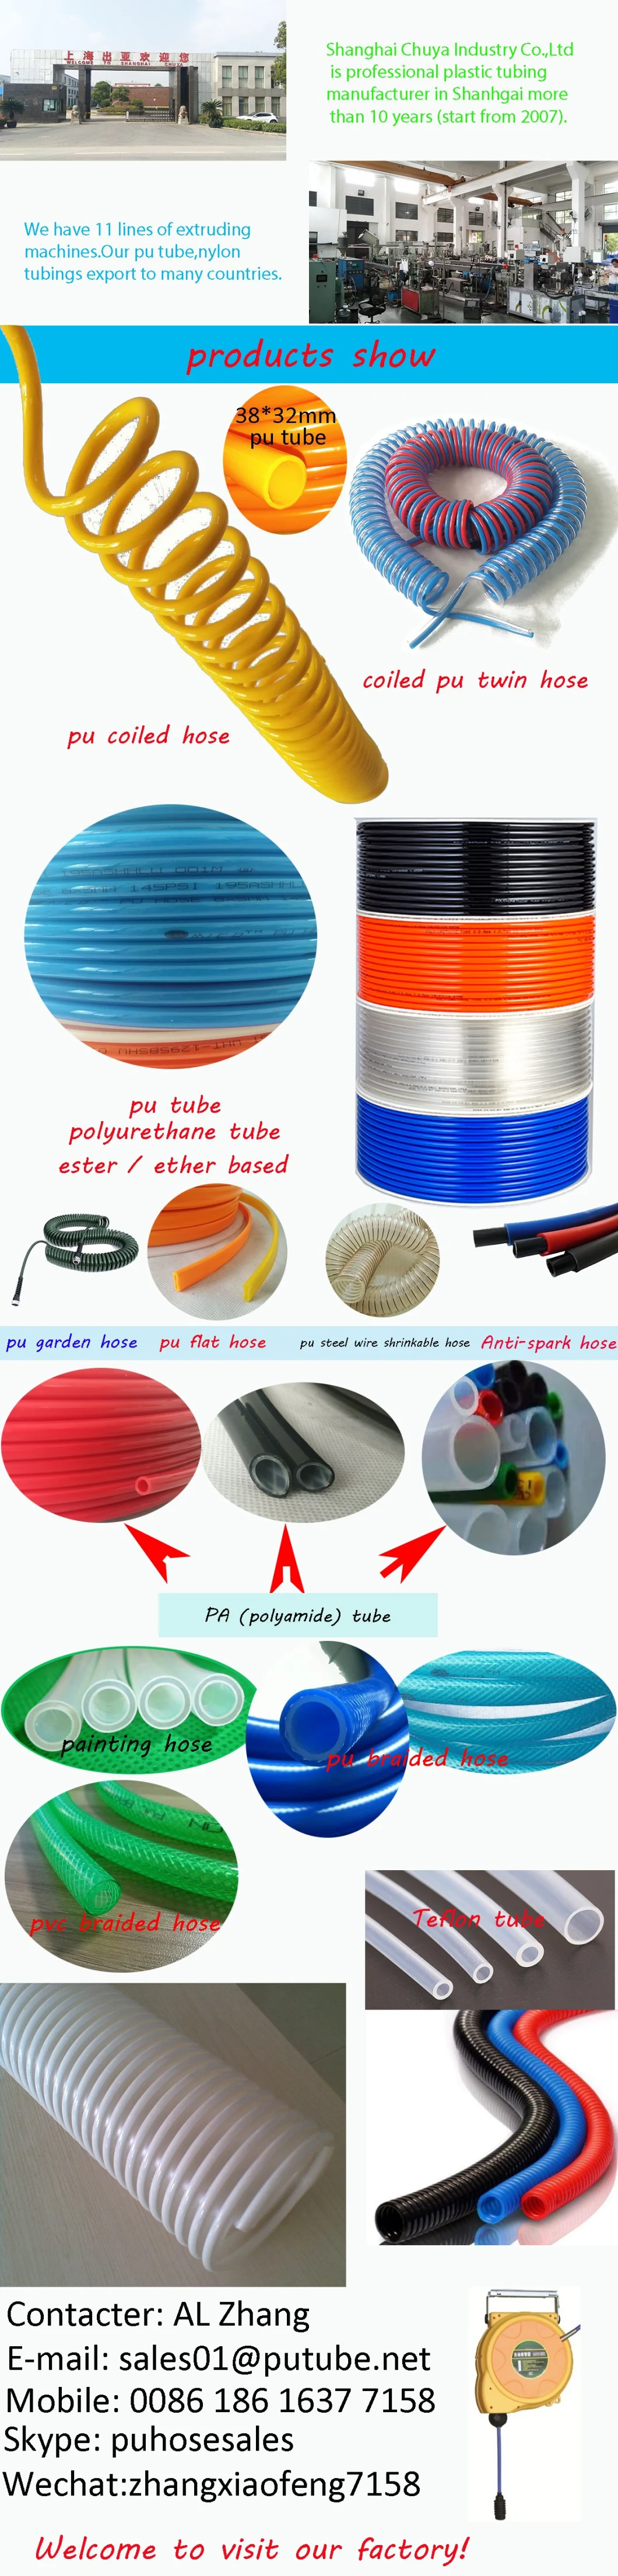 PU Tube PU Air Hose Polyurethane Tubing for Pneumatic Tools